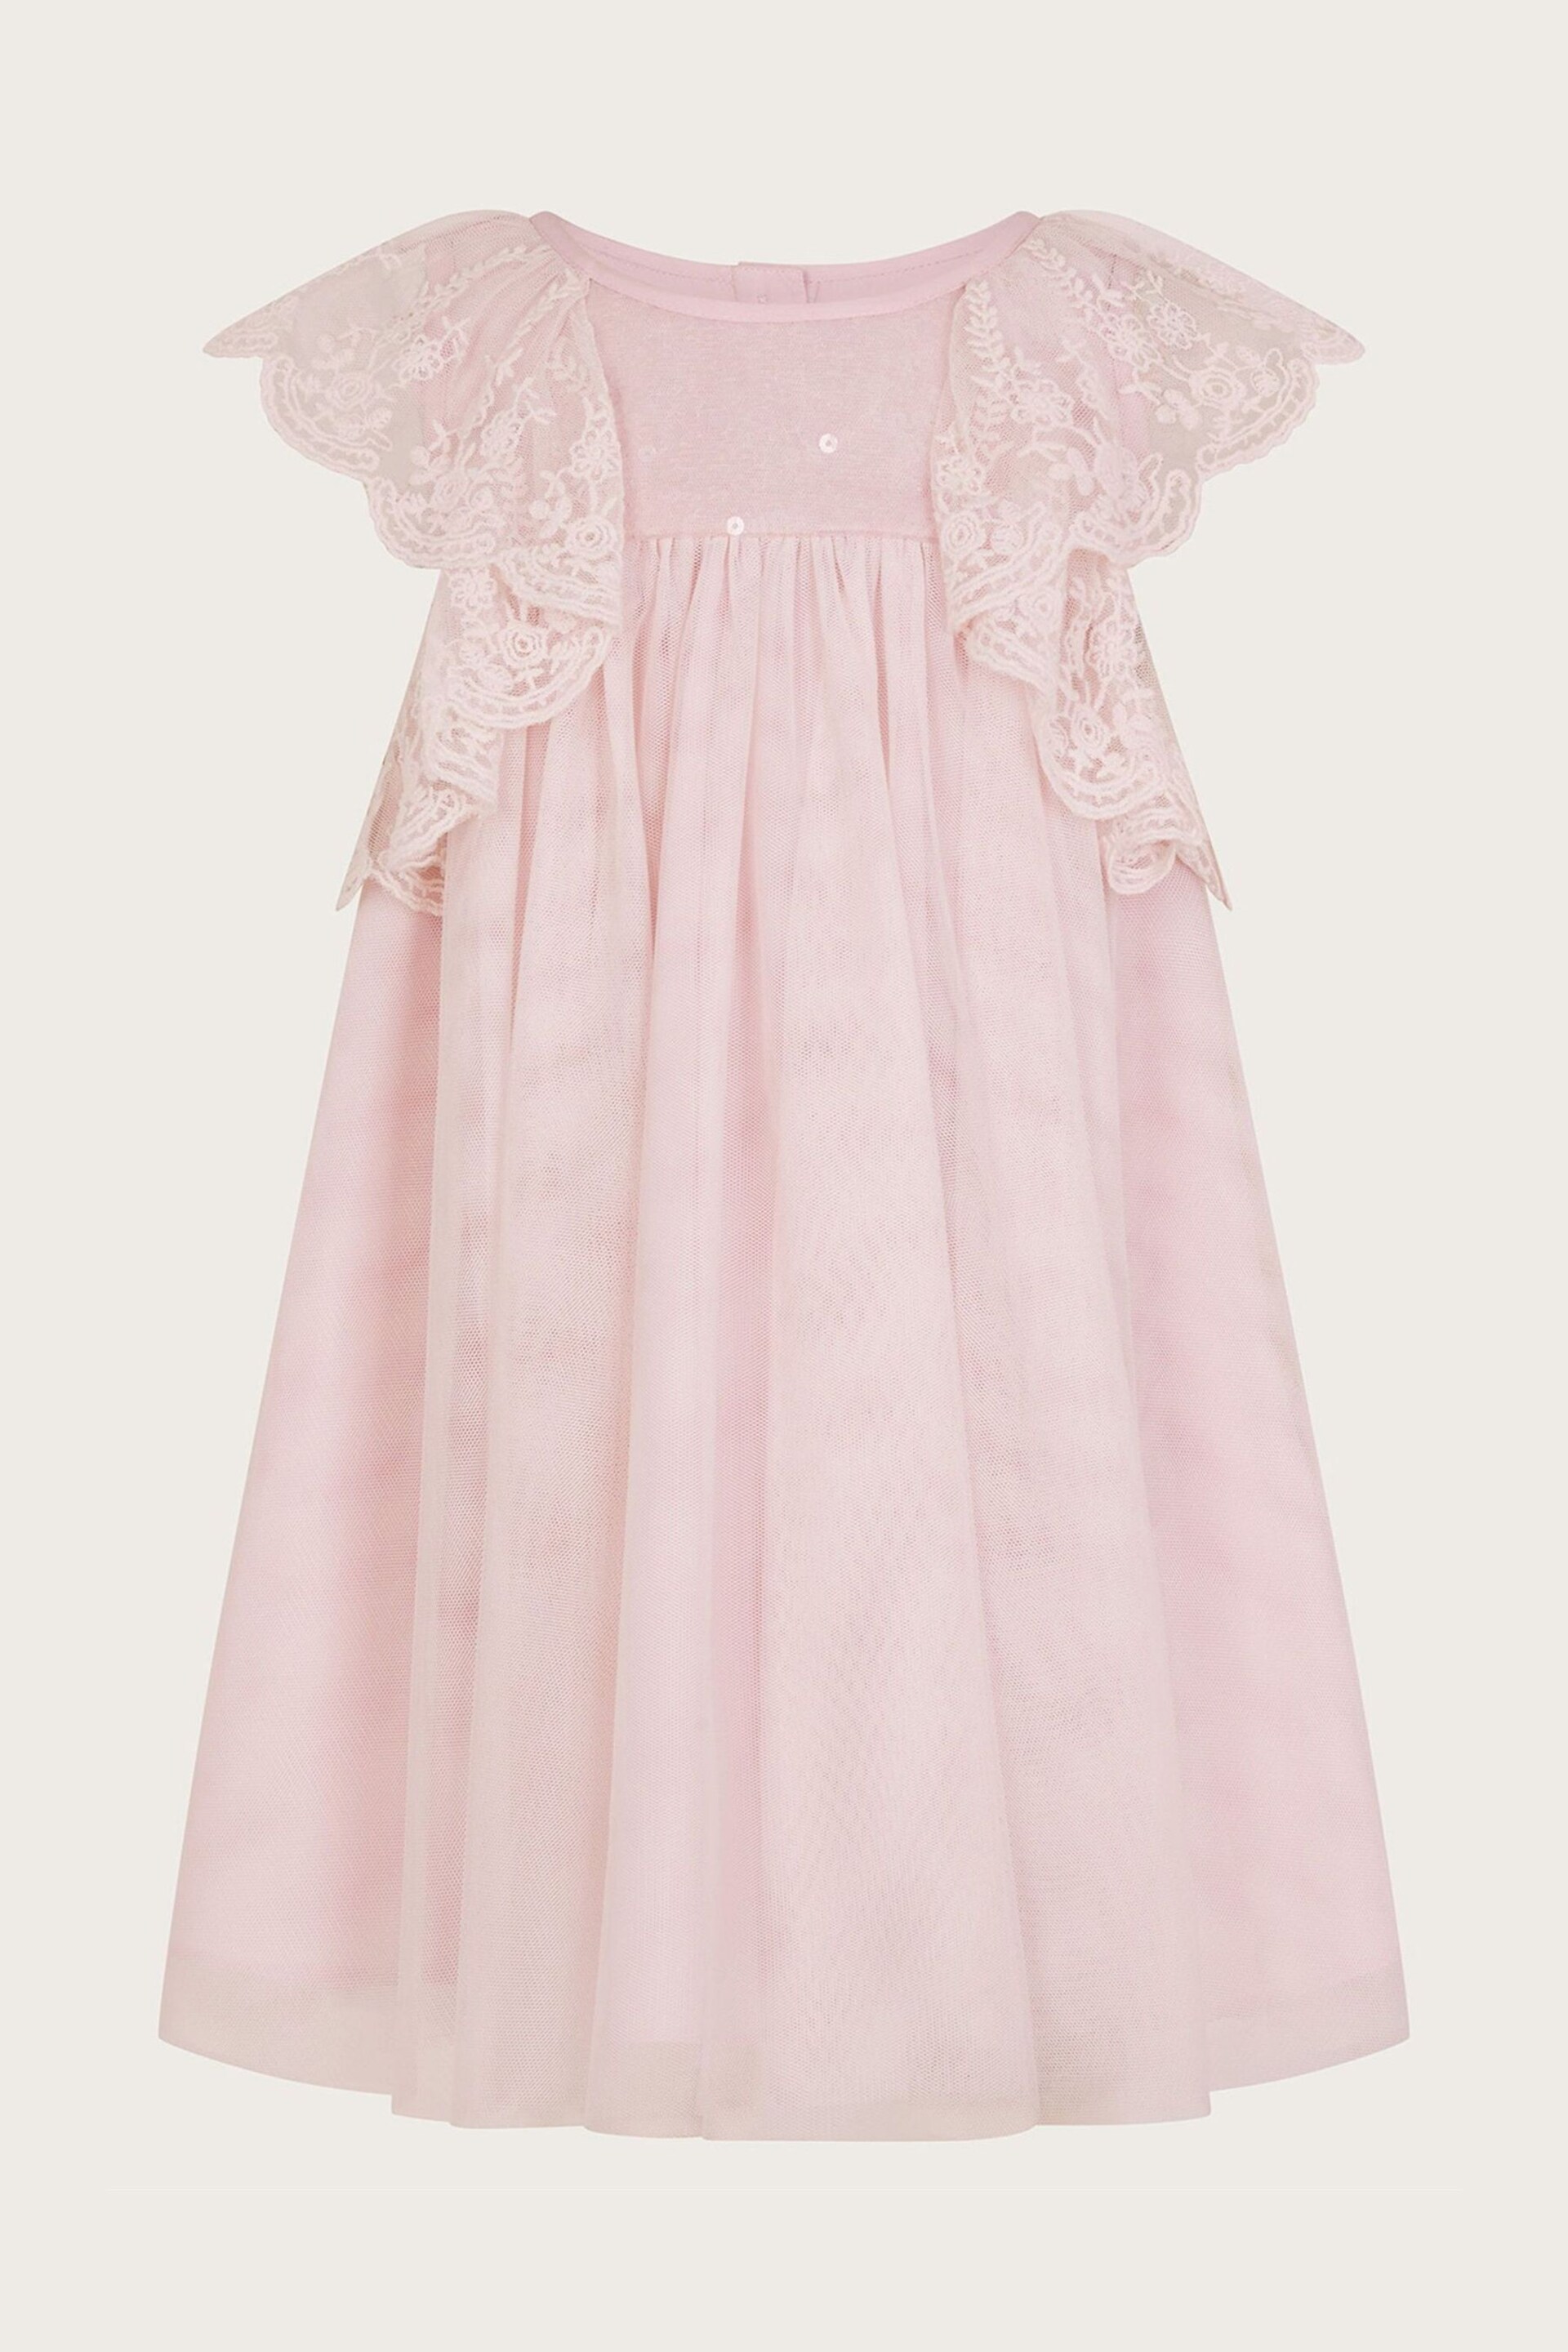 Monsoon Pink Baby Charlotte Frill Dress - Image 2 of 4